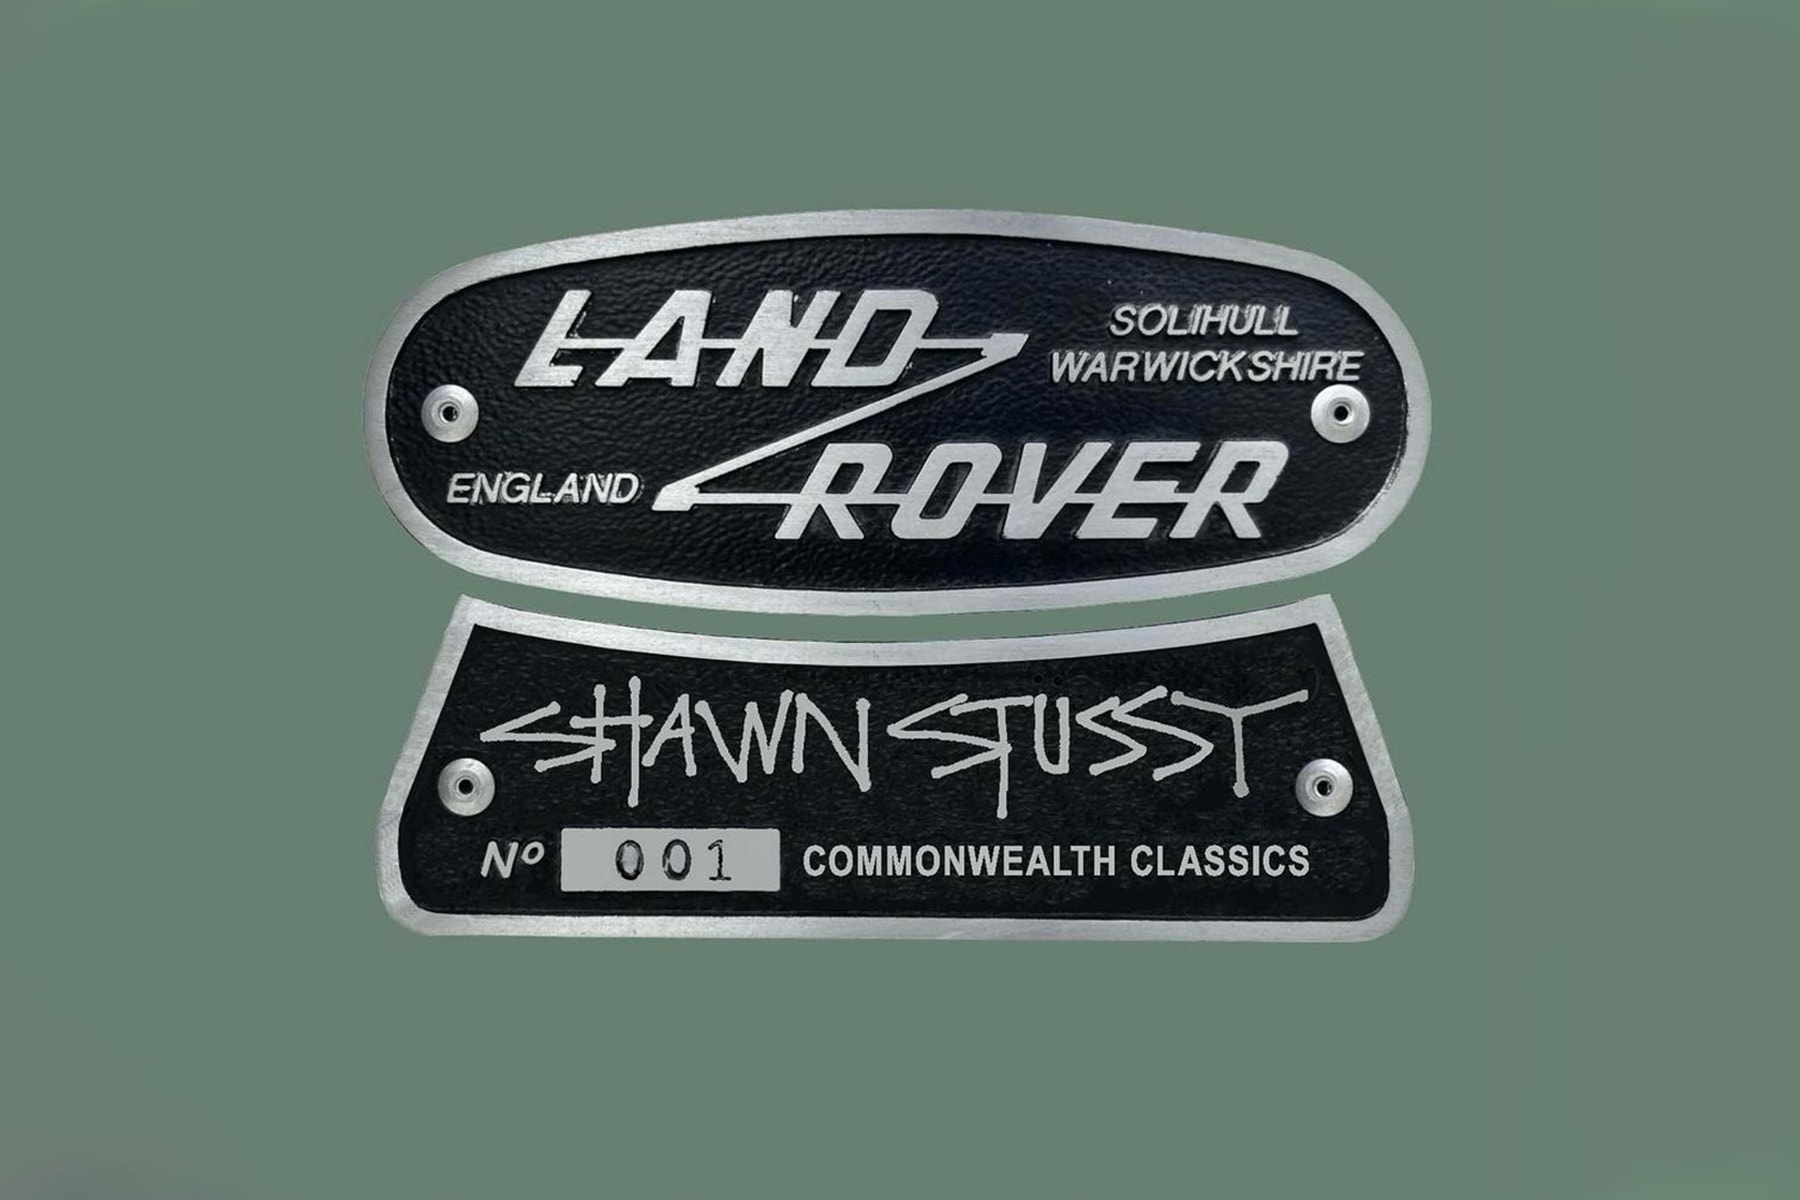 Shawn Stussy 率先曝光 Land Rover 全新合作企劃